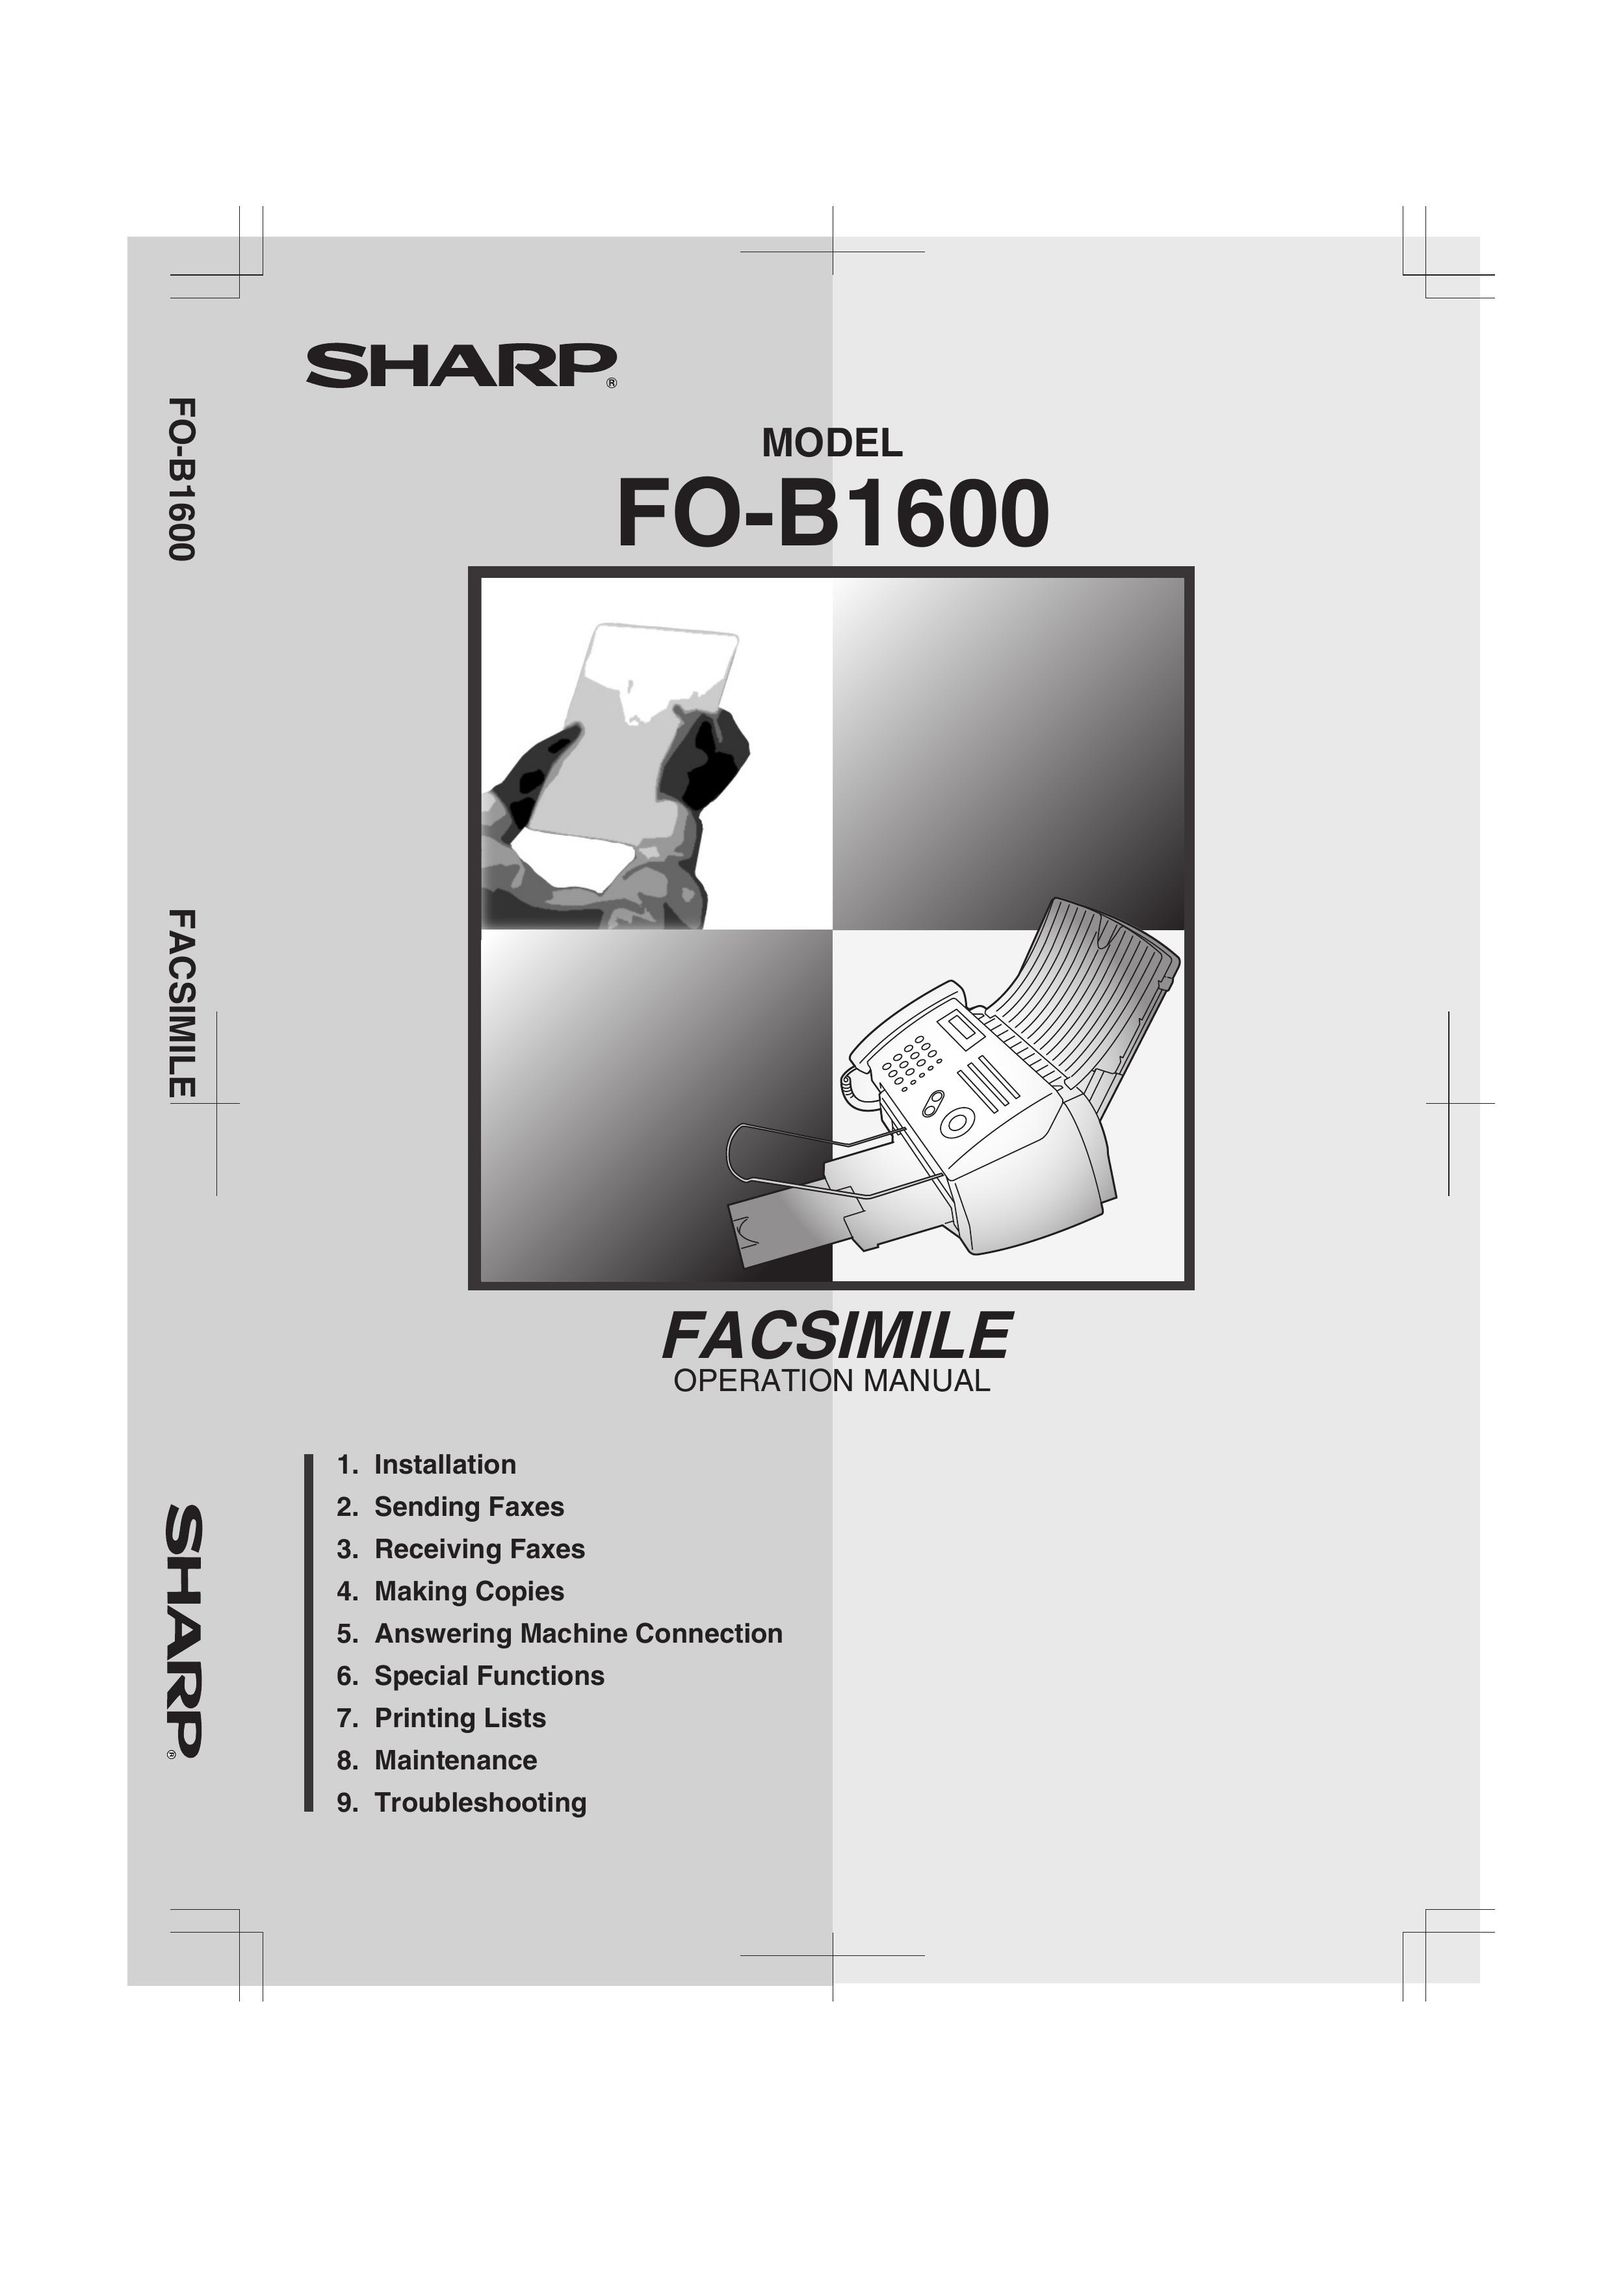 Sharp FO-B1600 Fax Machine User Manual